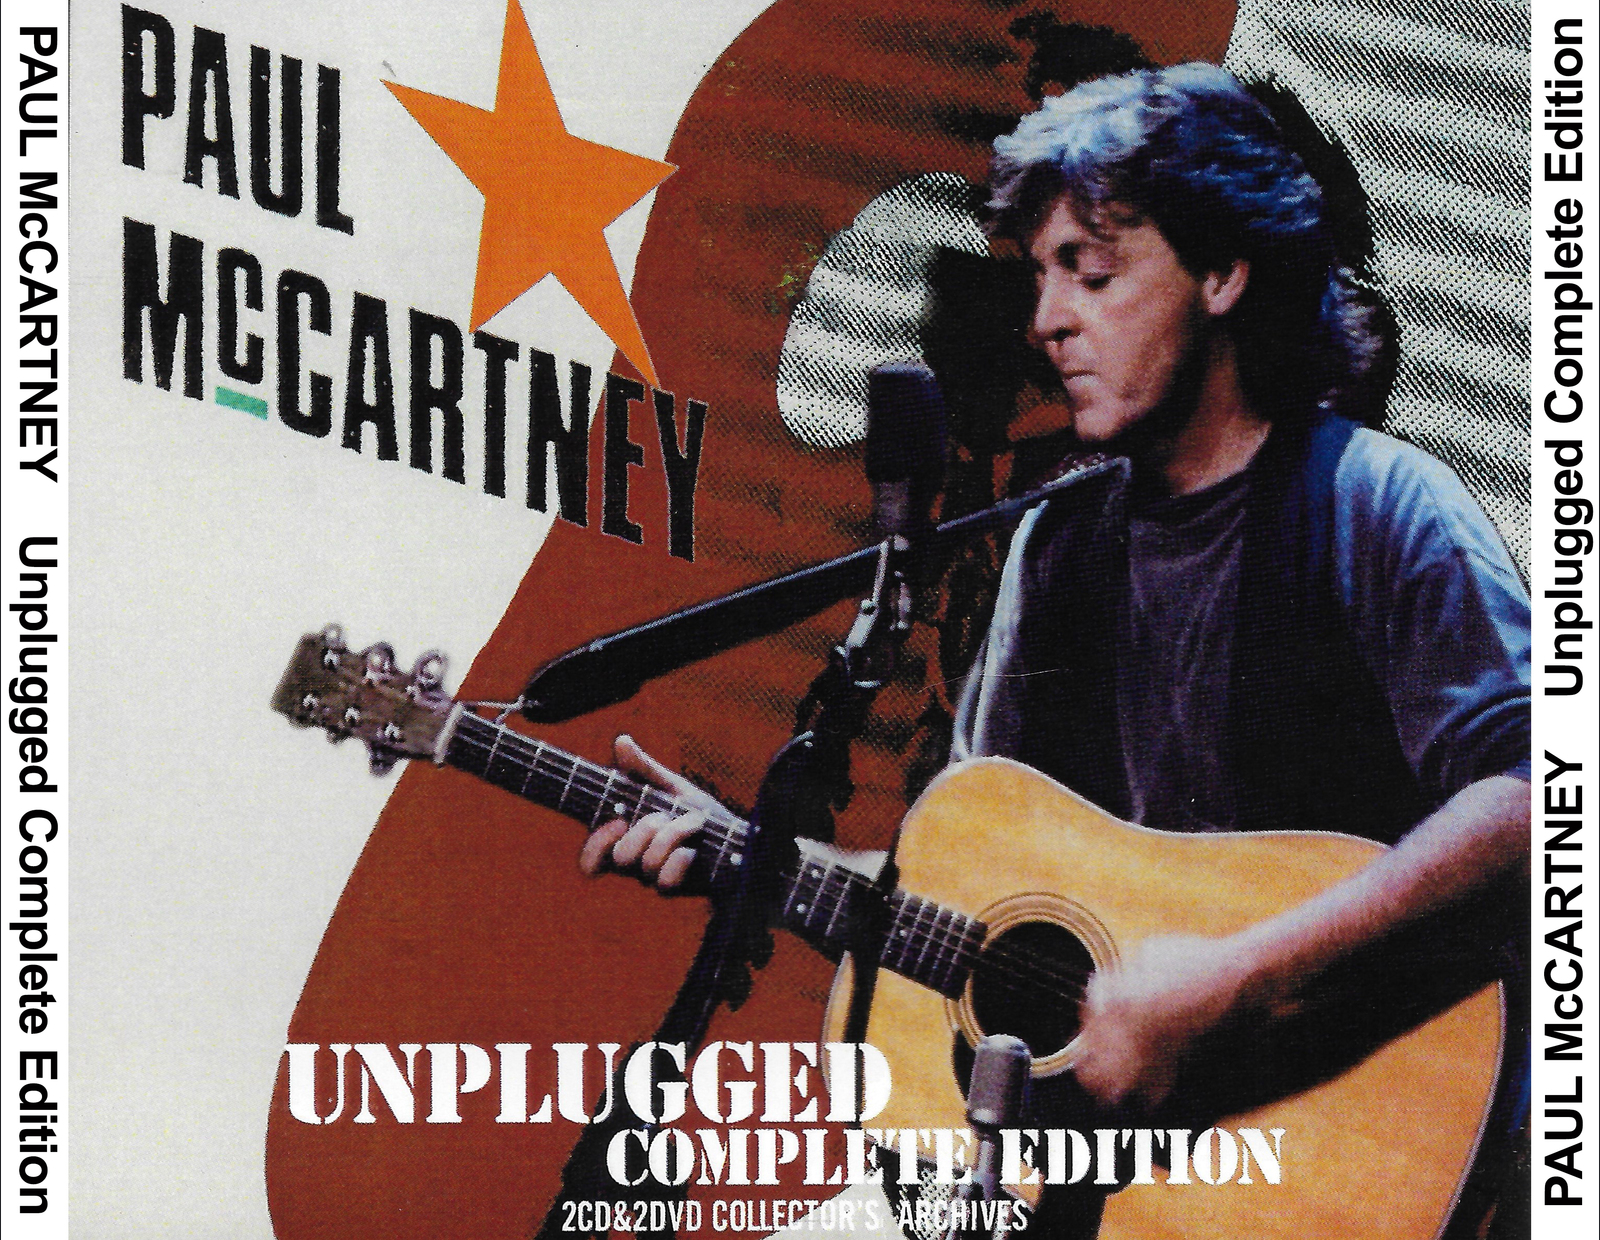 Paul McCartney Unplugged Complete Edition 2CD+2DVD Very Rare - CDs